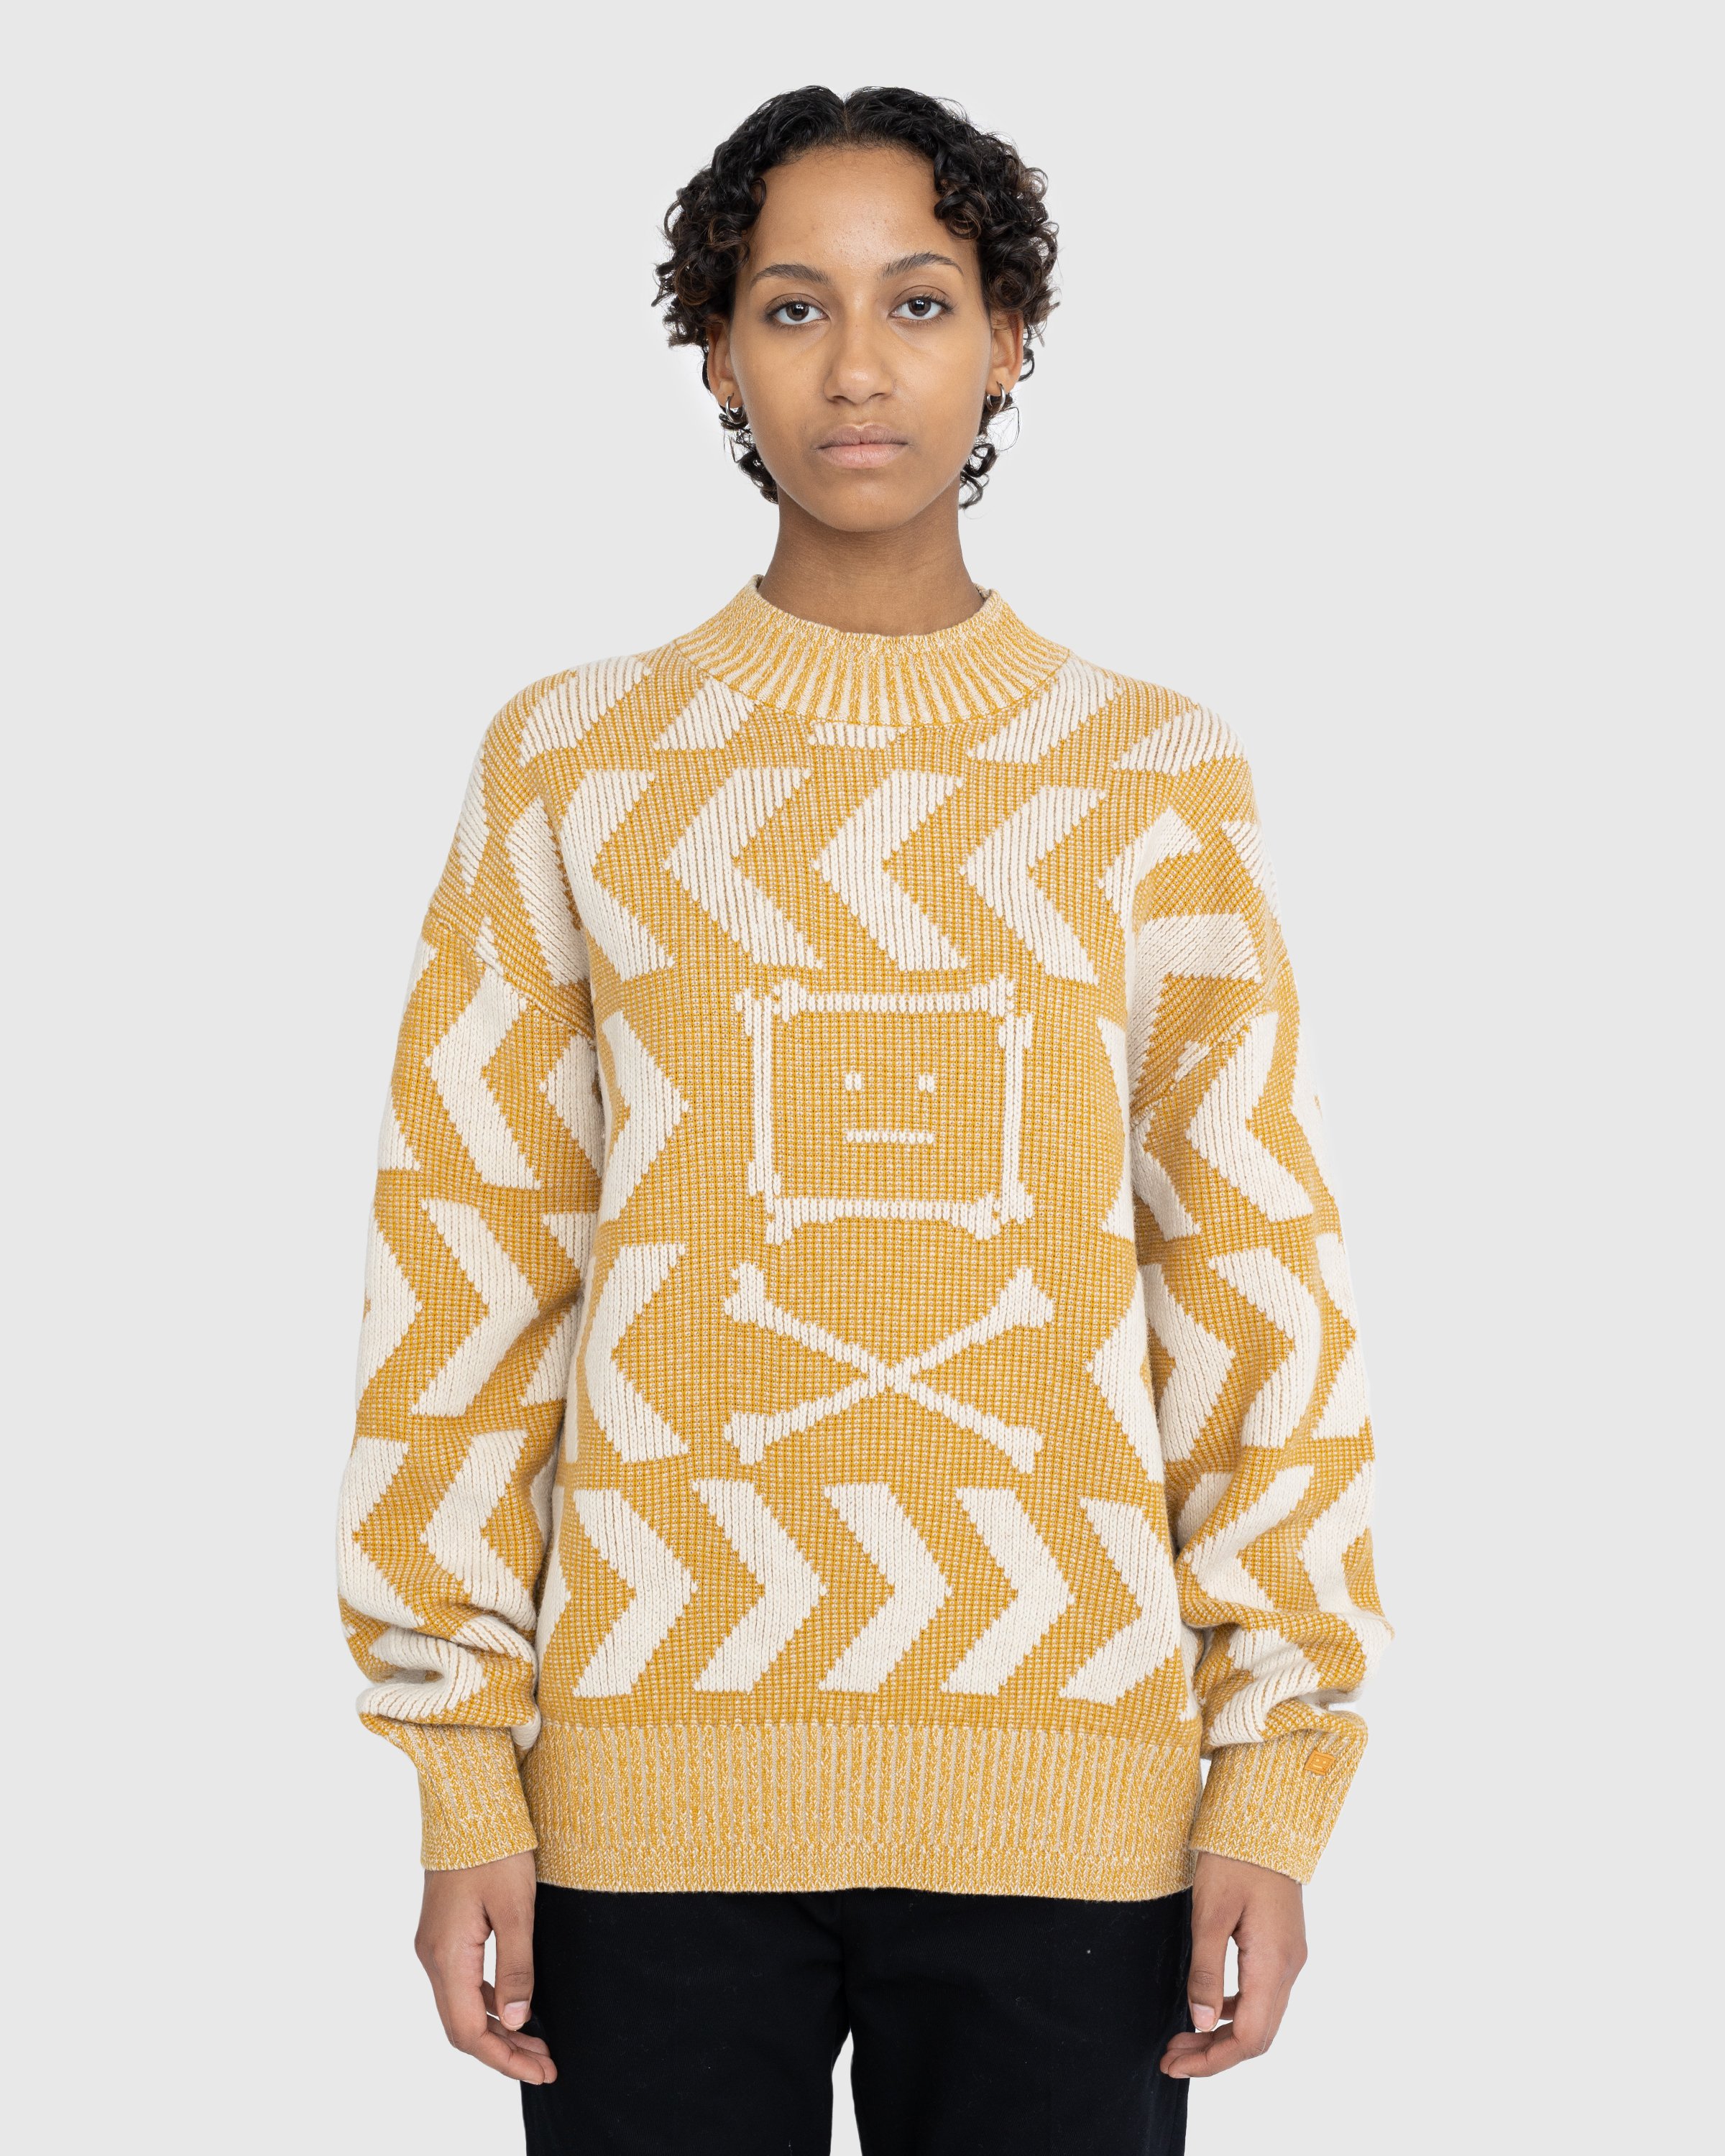 Acne Studios - Face Crossbones and Arrow Crewneck Sweater Yellow - Clothing - Yellow - Image 2